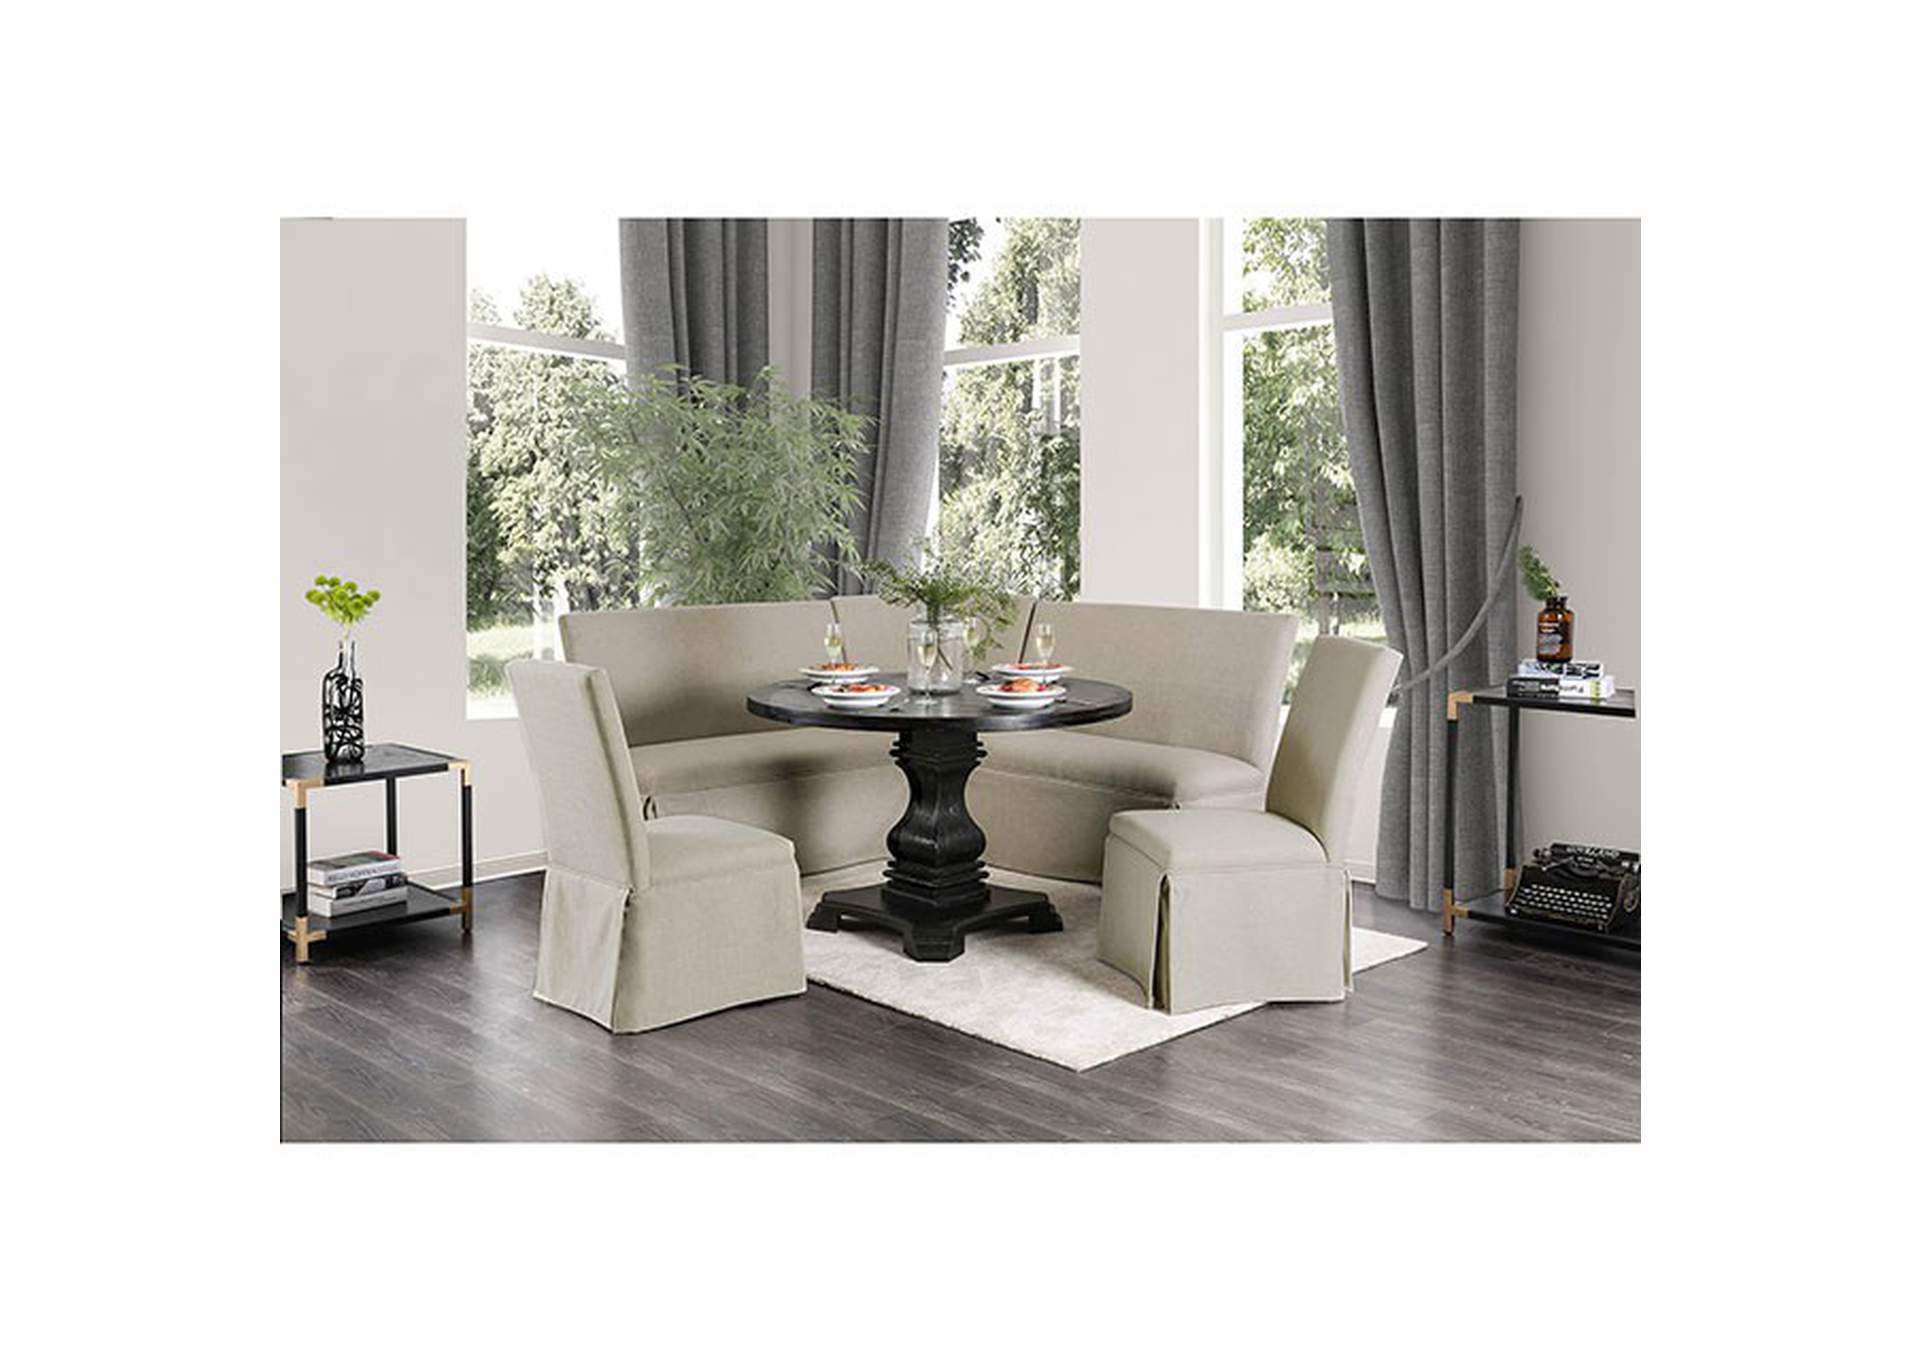 Nerissa Round Table,Furniture of America